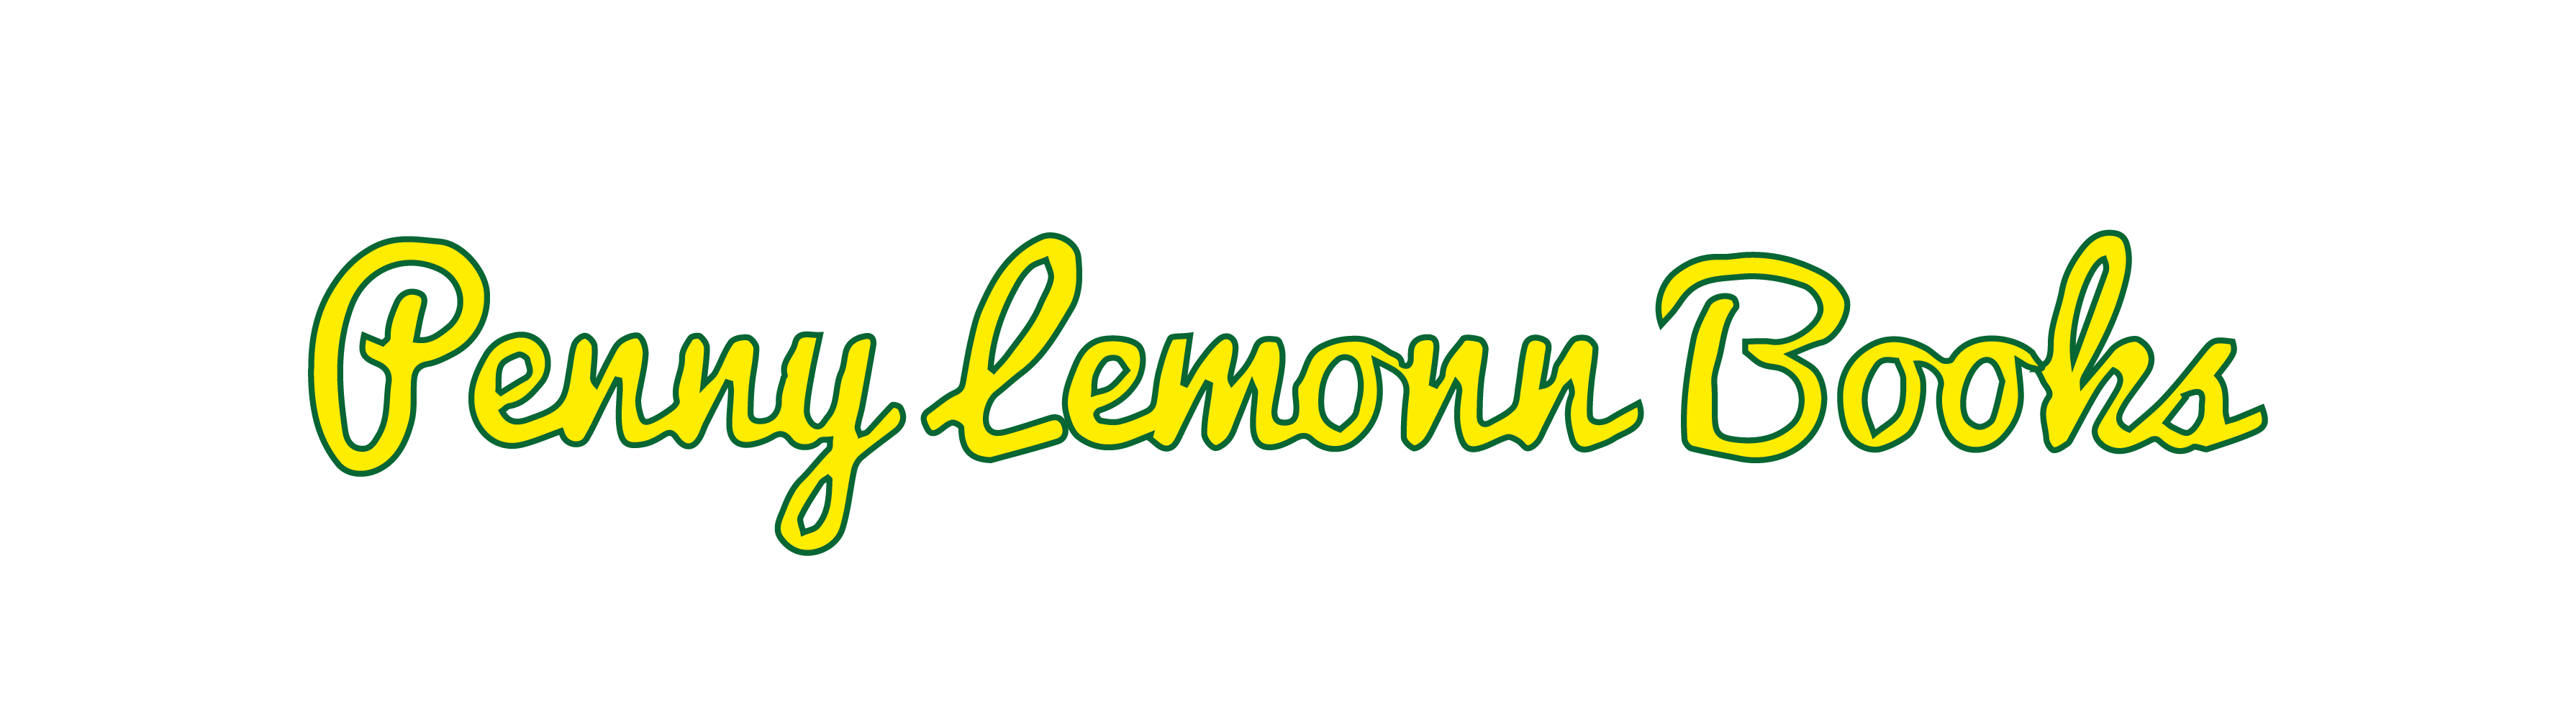 Penny Lemonn